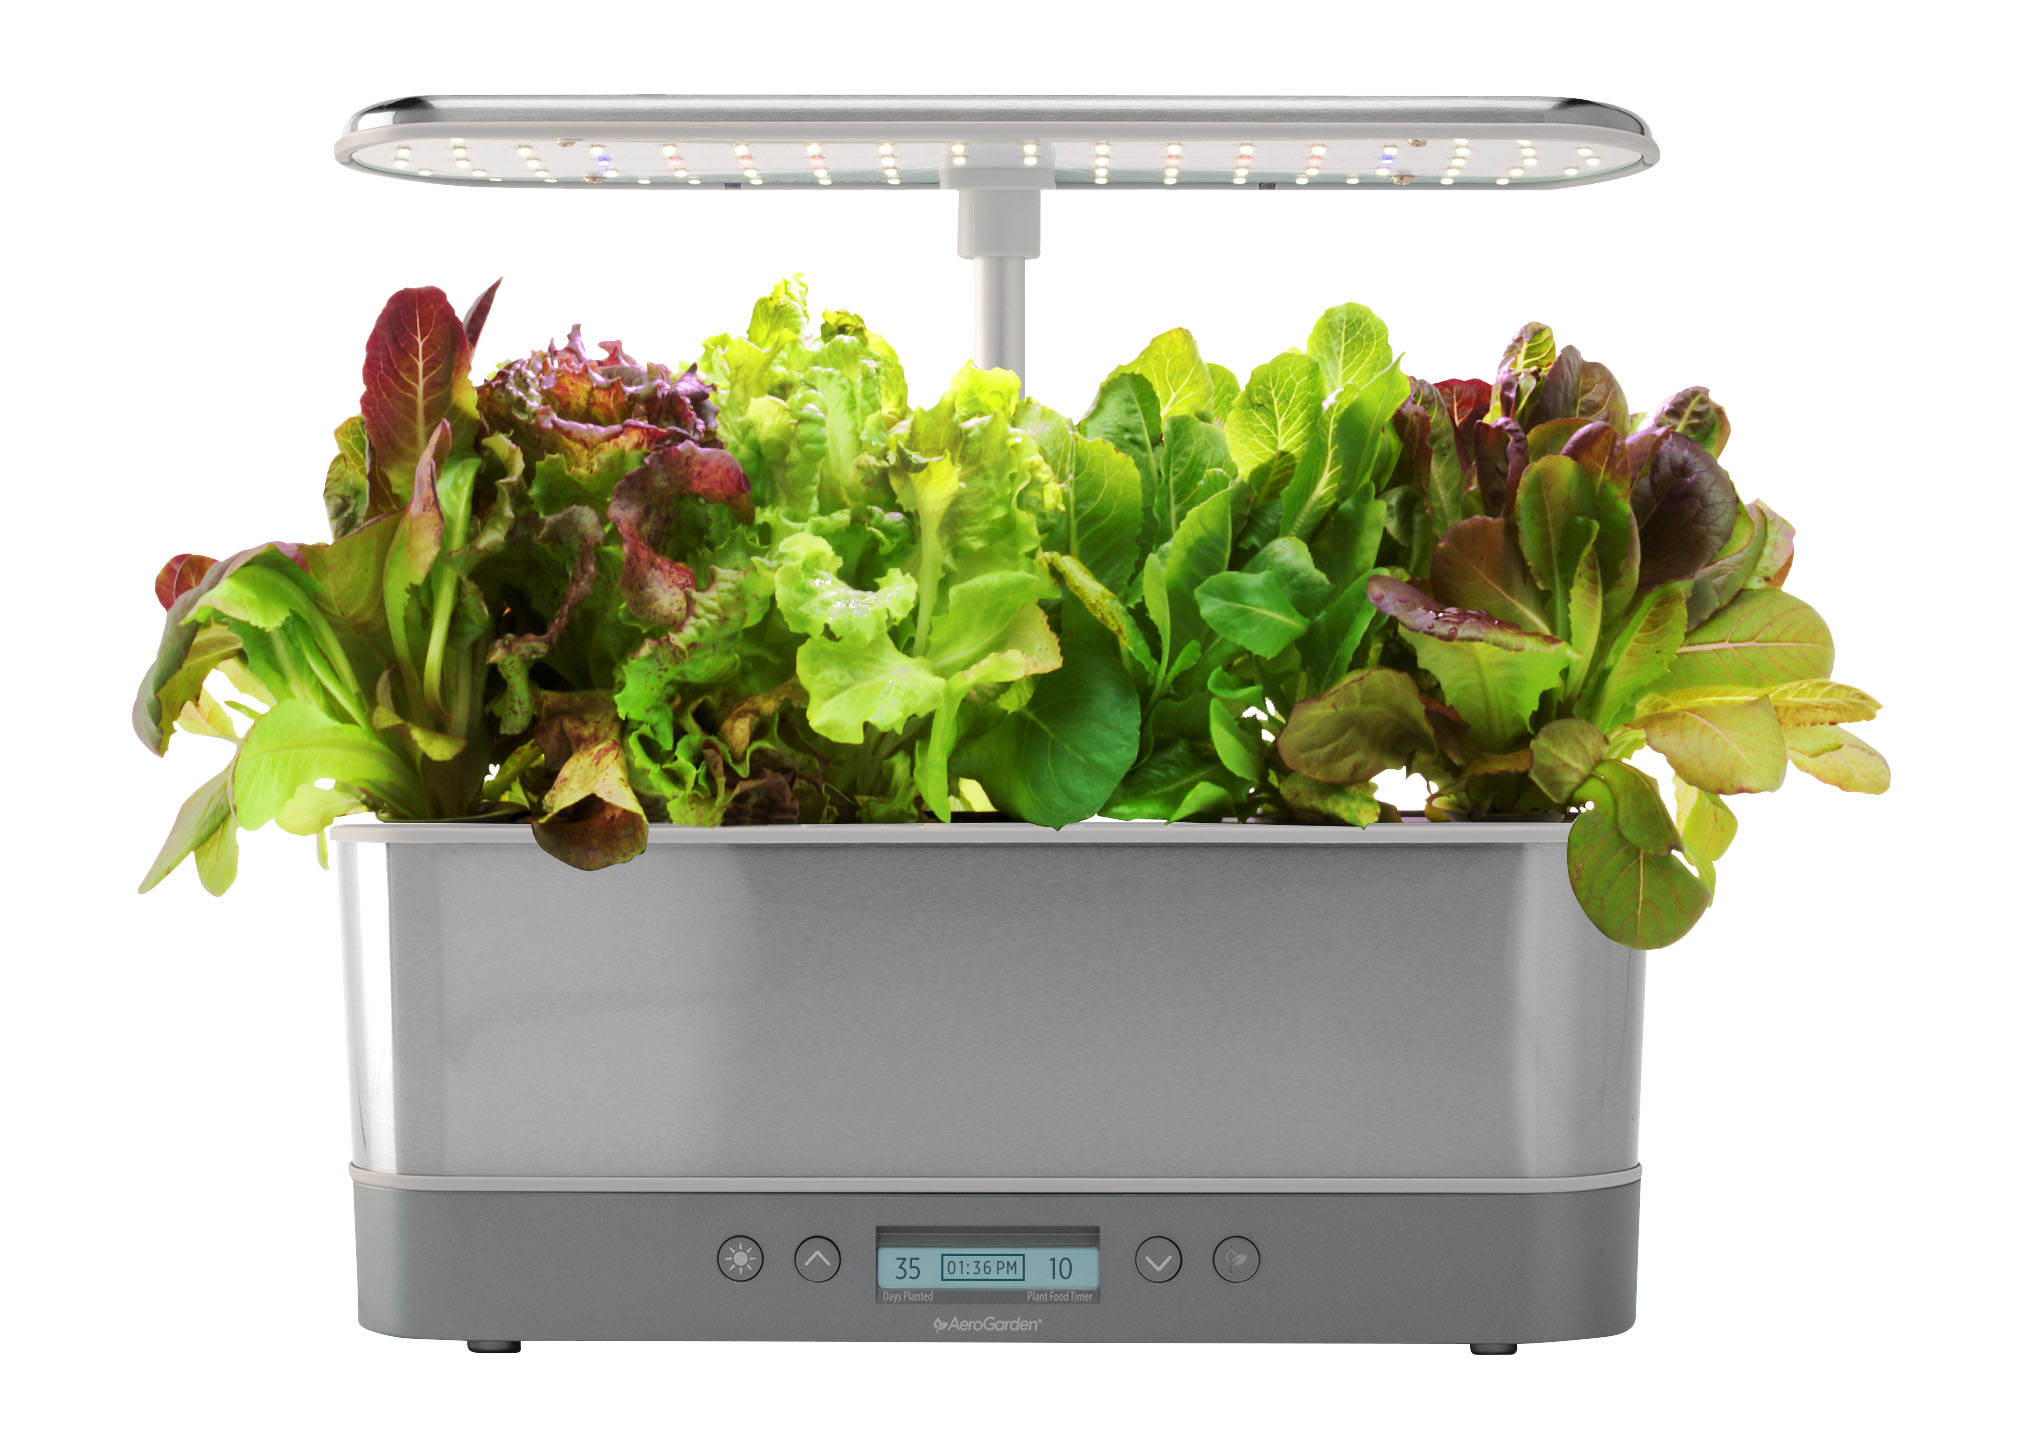 AeroGarden Heirloom Salad Greens Seed Pod Kit 6 6-pod for sale online